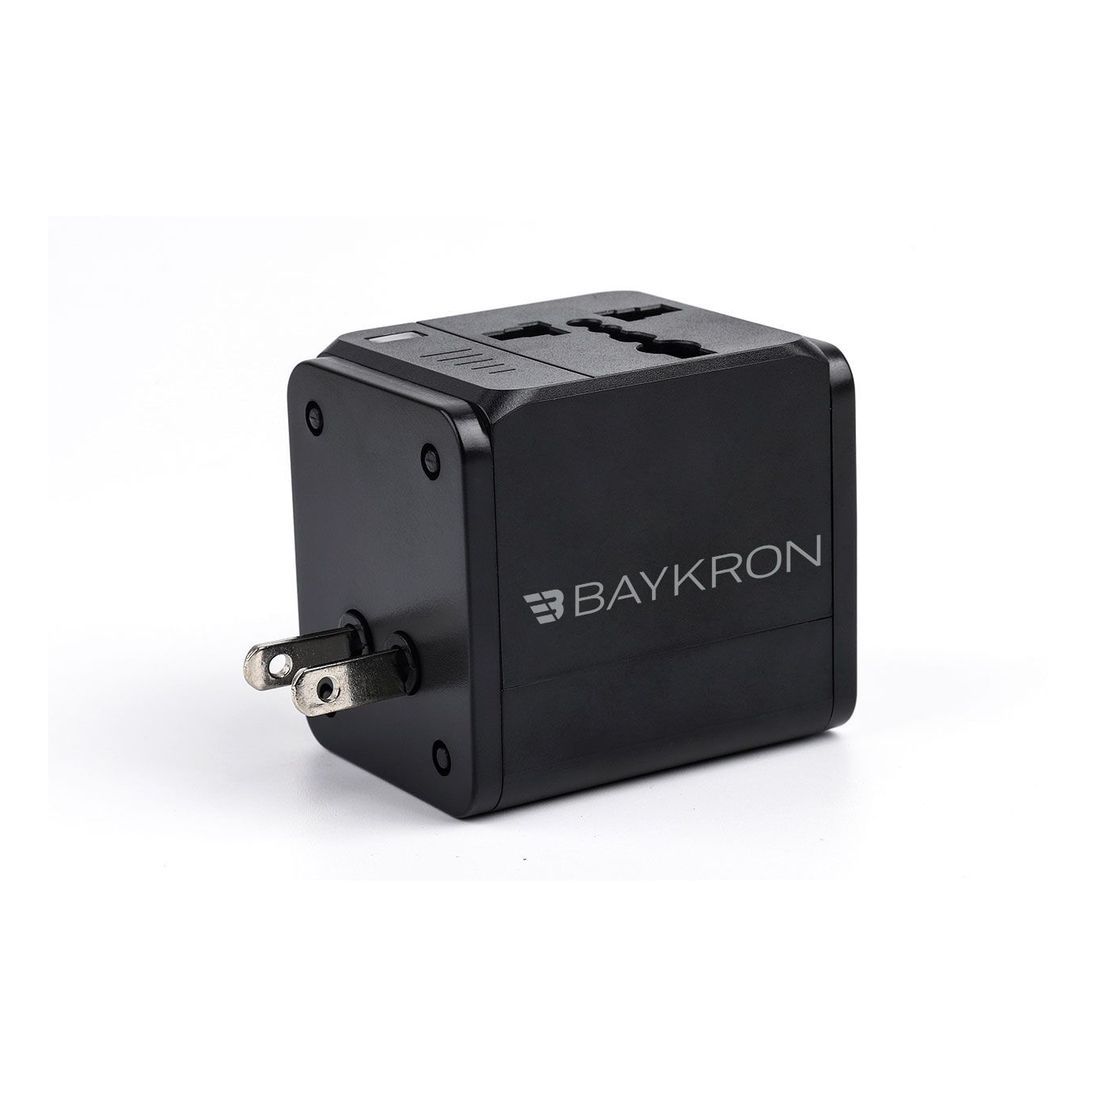 Baykron Universal Travel Adapter - Black